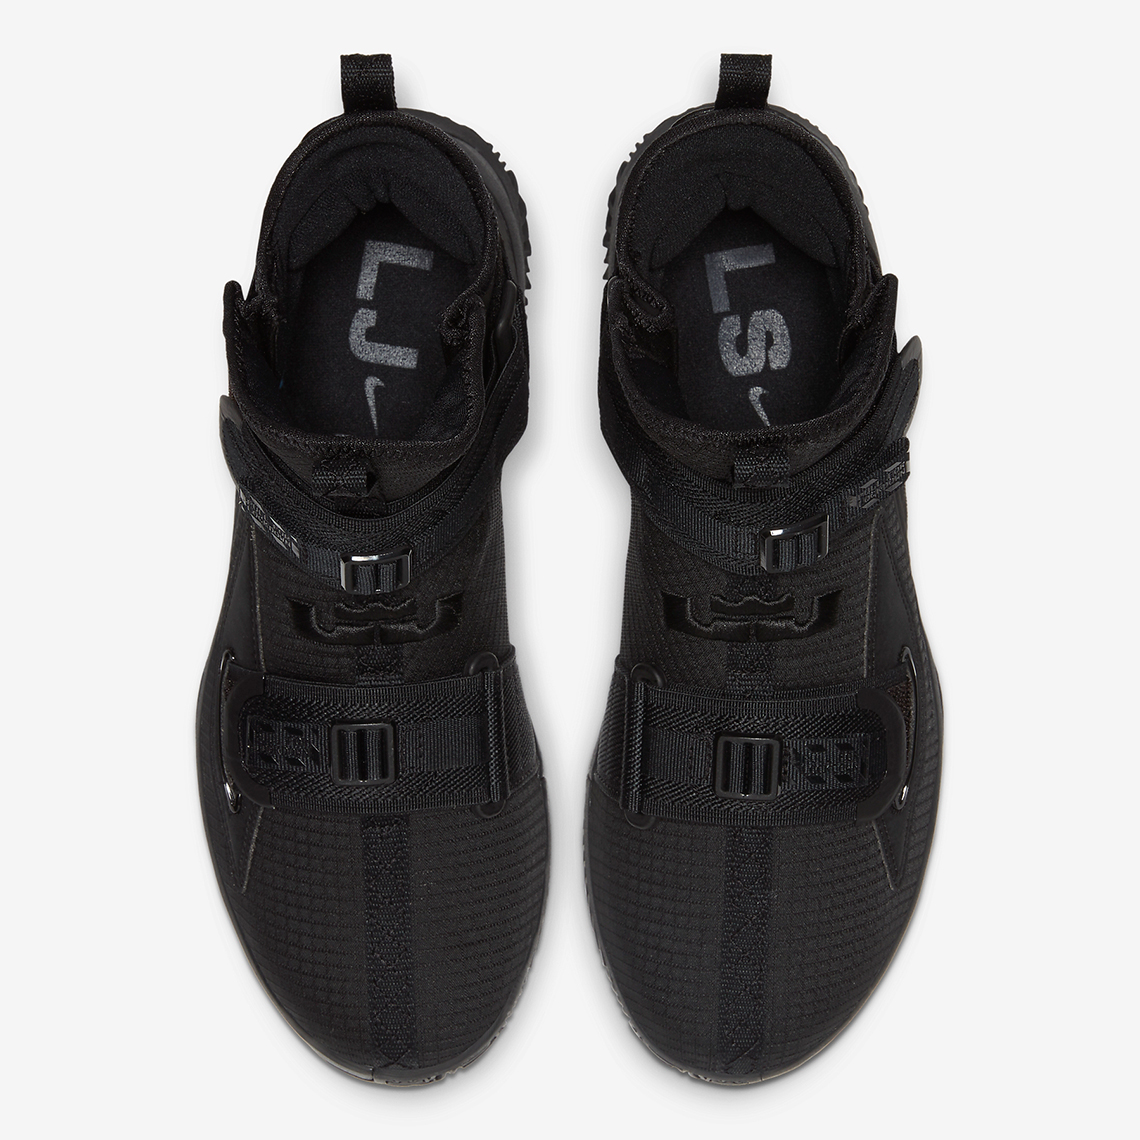 lebron shoes black